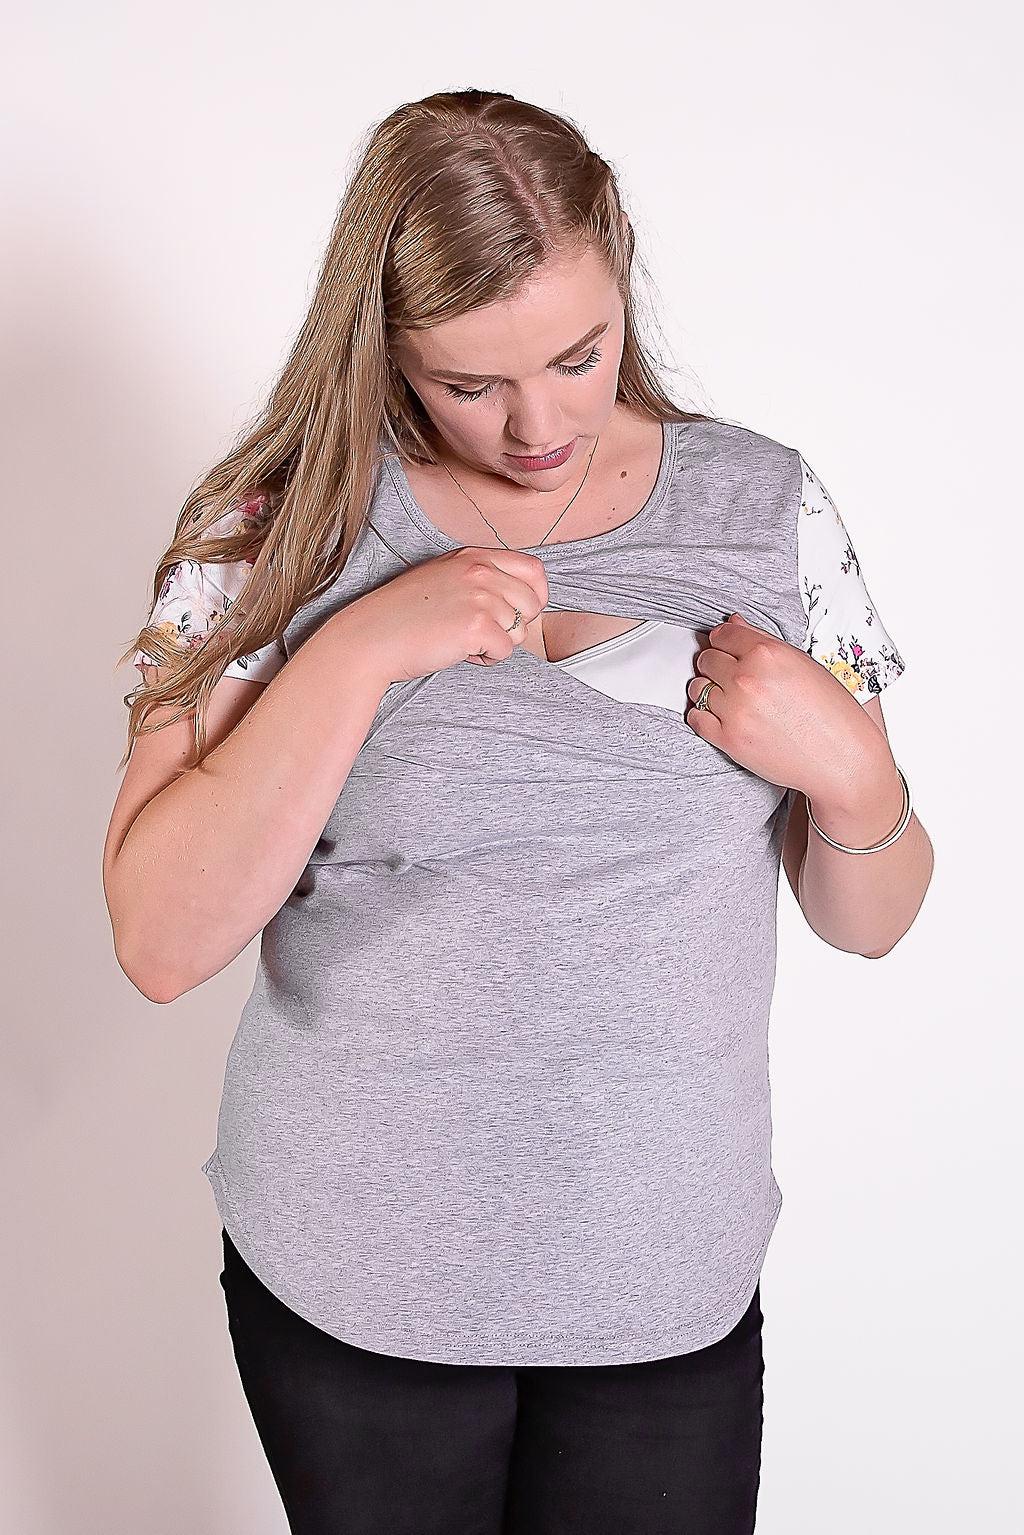 Summer Floral Sleeve Tee in Grey - Flap-Breastfeeding t-shirt NZ, Maternity t-shirt NZ, Flourish Maternity